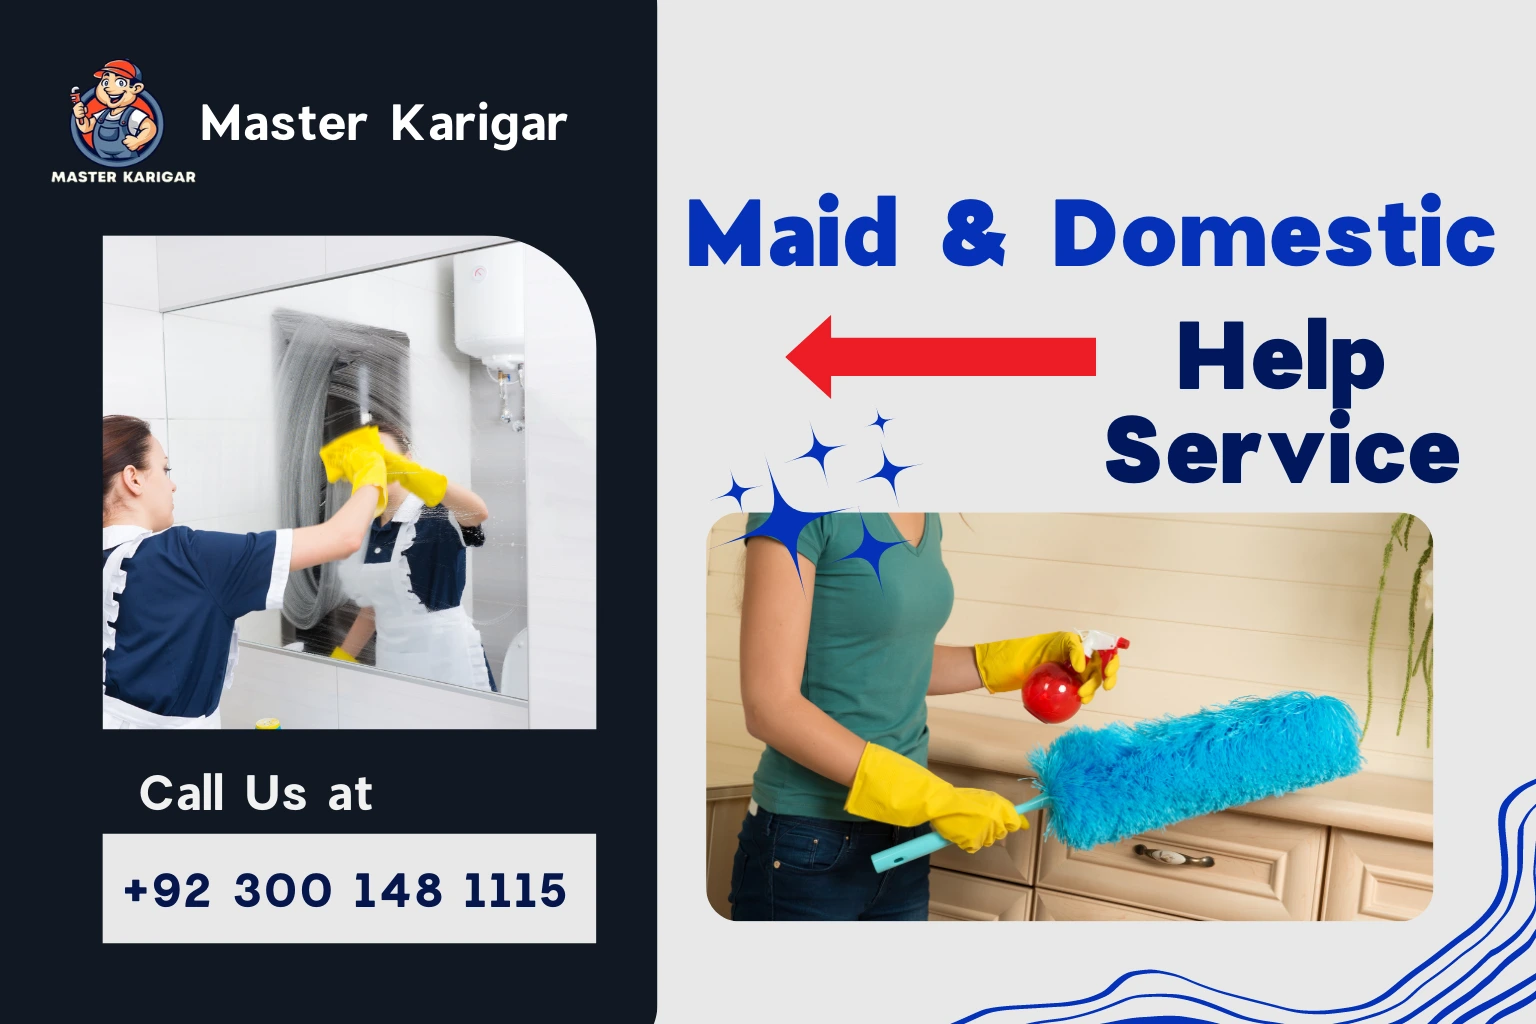 Maid & Domestic Help Service